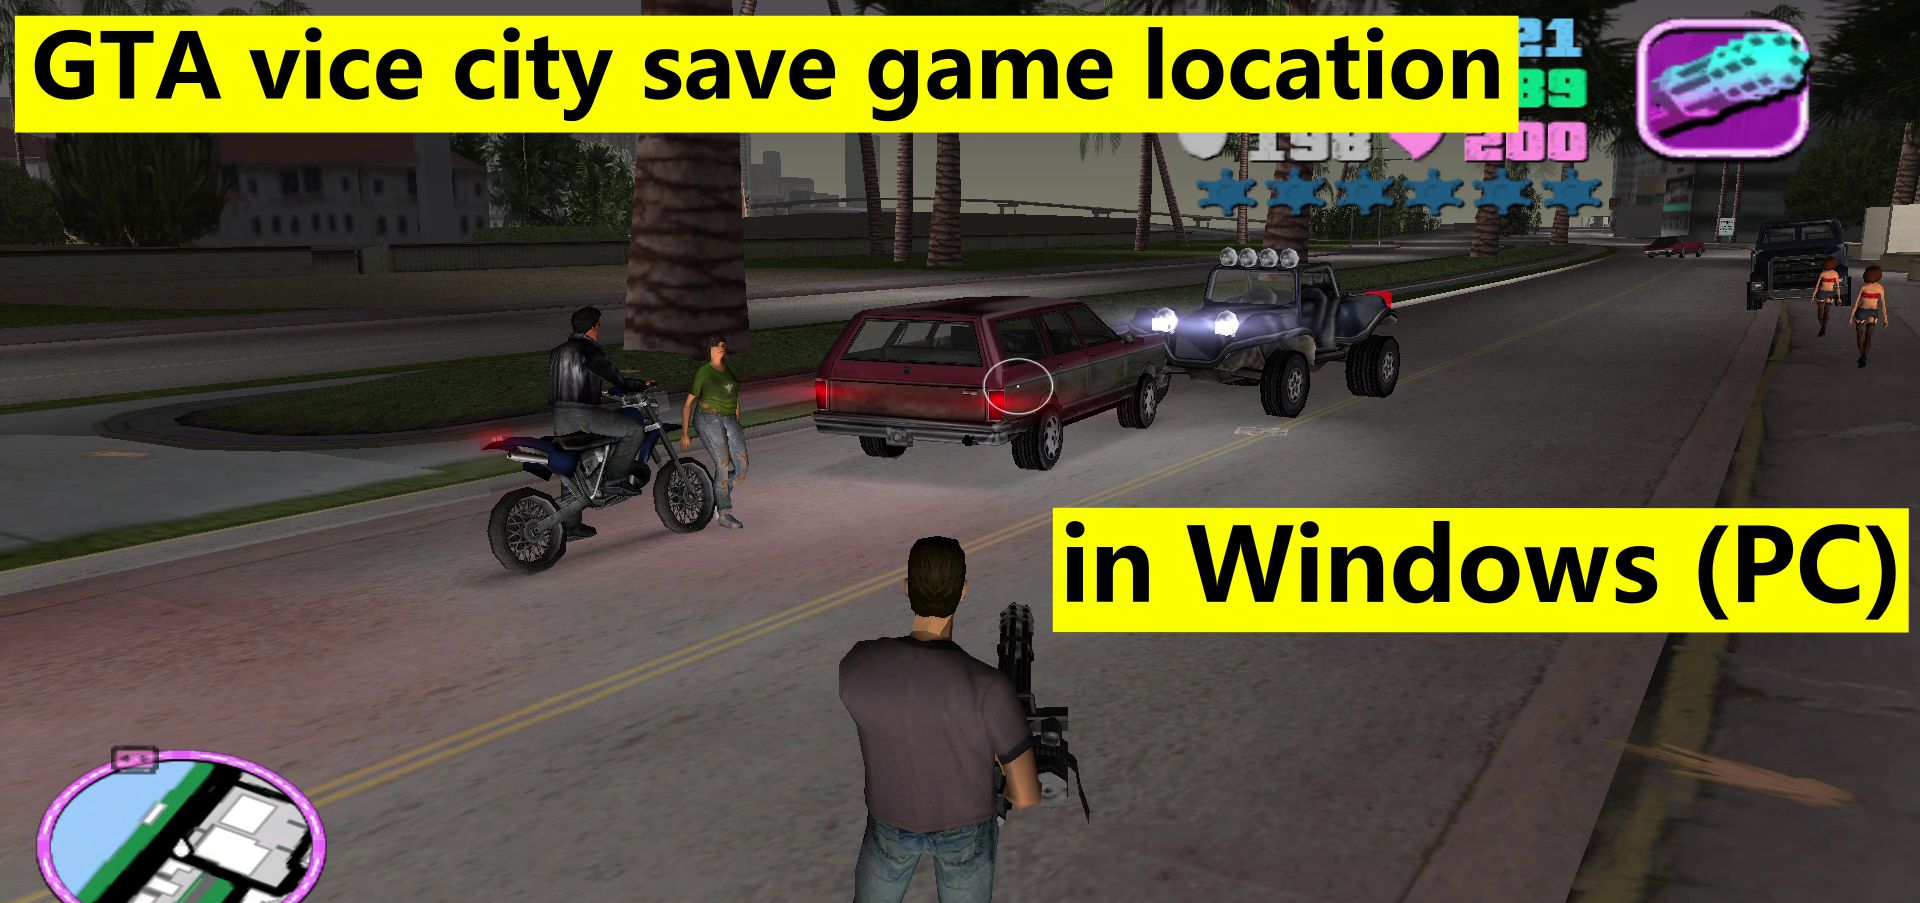 GTA vice city savegame location in Windows (PC)